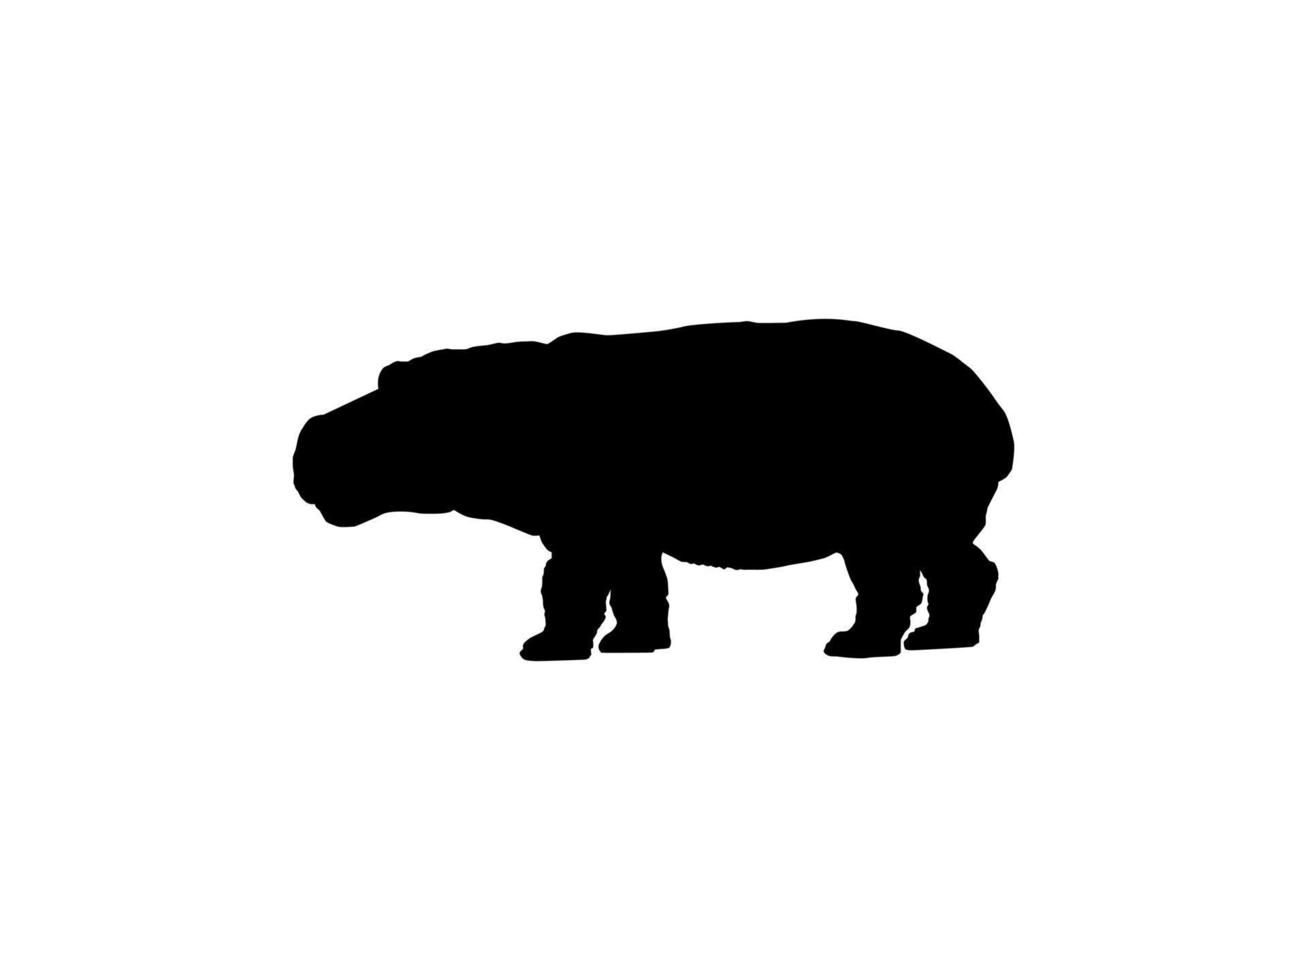 hipopótamo silueta para logo, Arte ilustración, icono, símbolo, pictograma o gráfico diseño elemento. vector ilustración